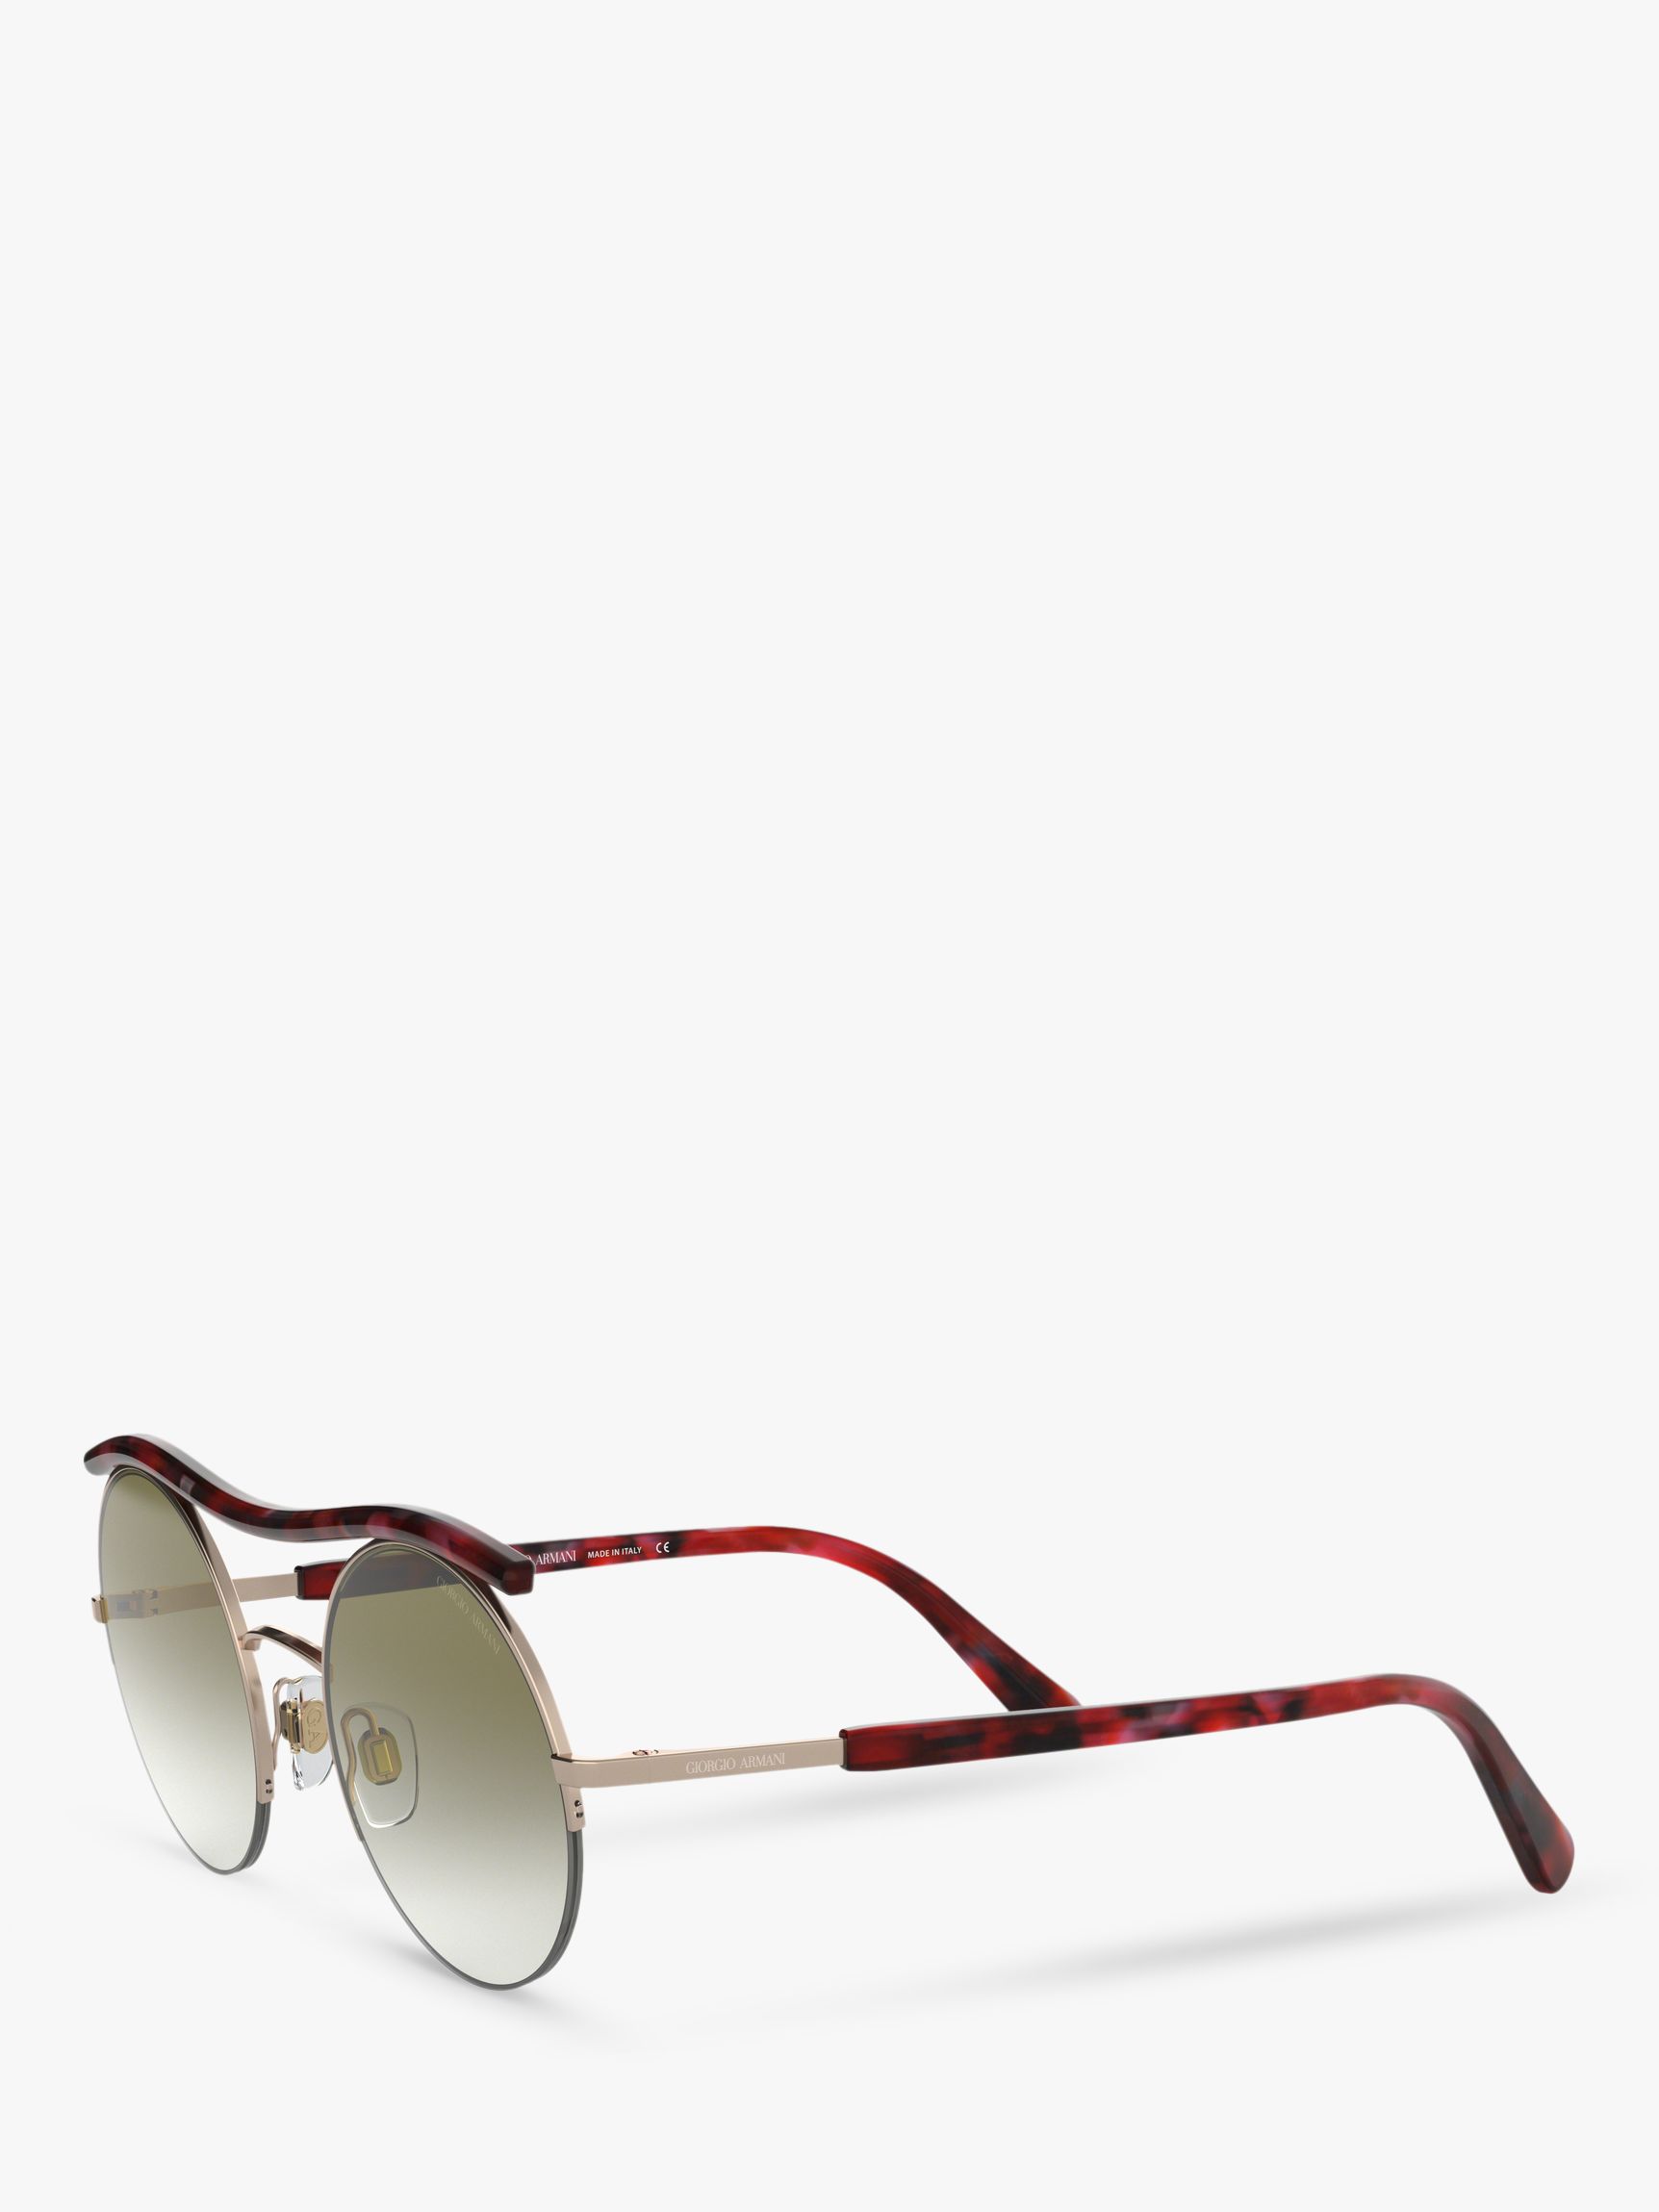 Buy Giorgio Armani AR6082 Women's Round Sunglasses Online at johnlewis.com